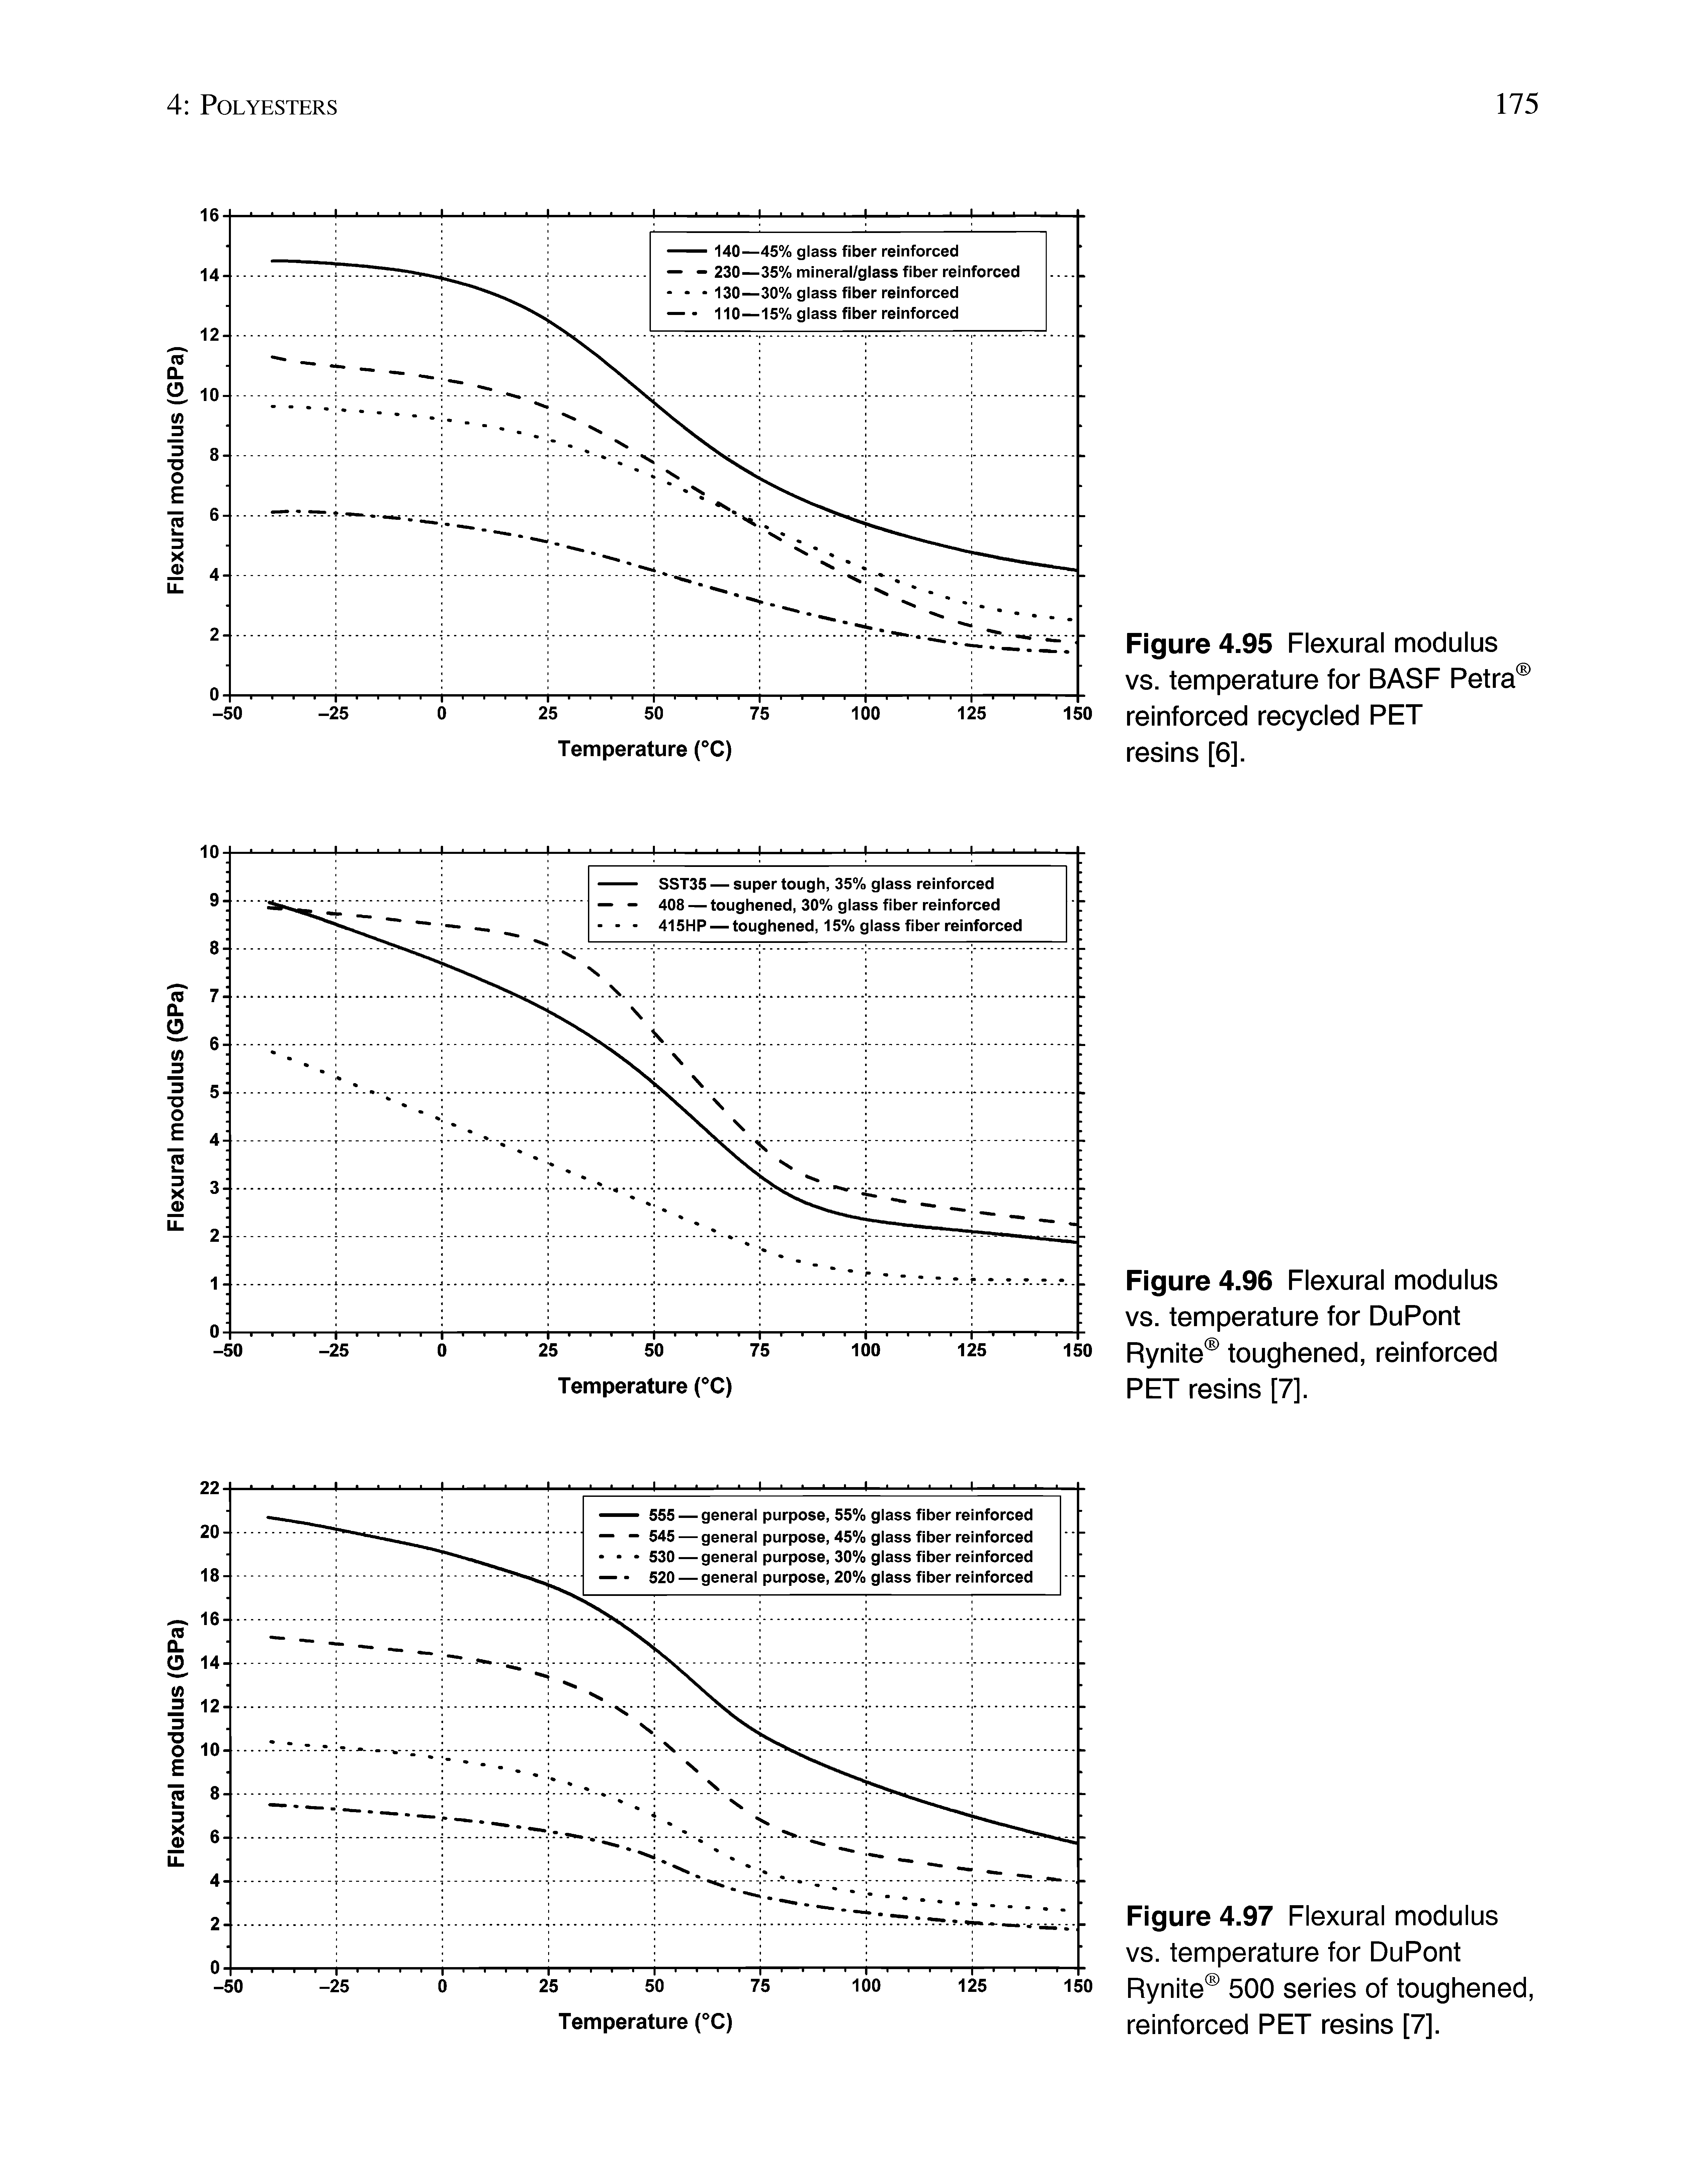 Figure 4.96 Flexural modulus vs. temperature for DuPont Rynite toughened, reinforced PET resins [7].